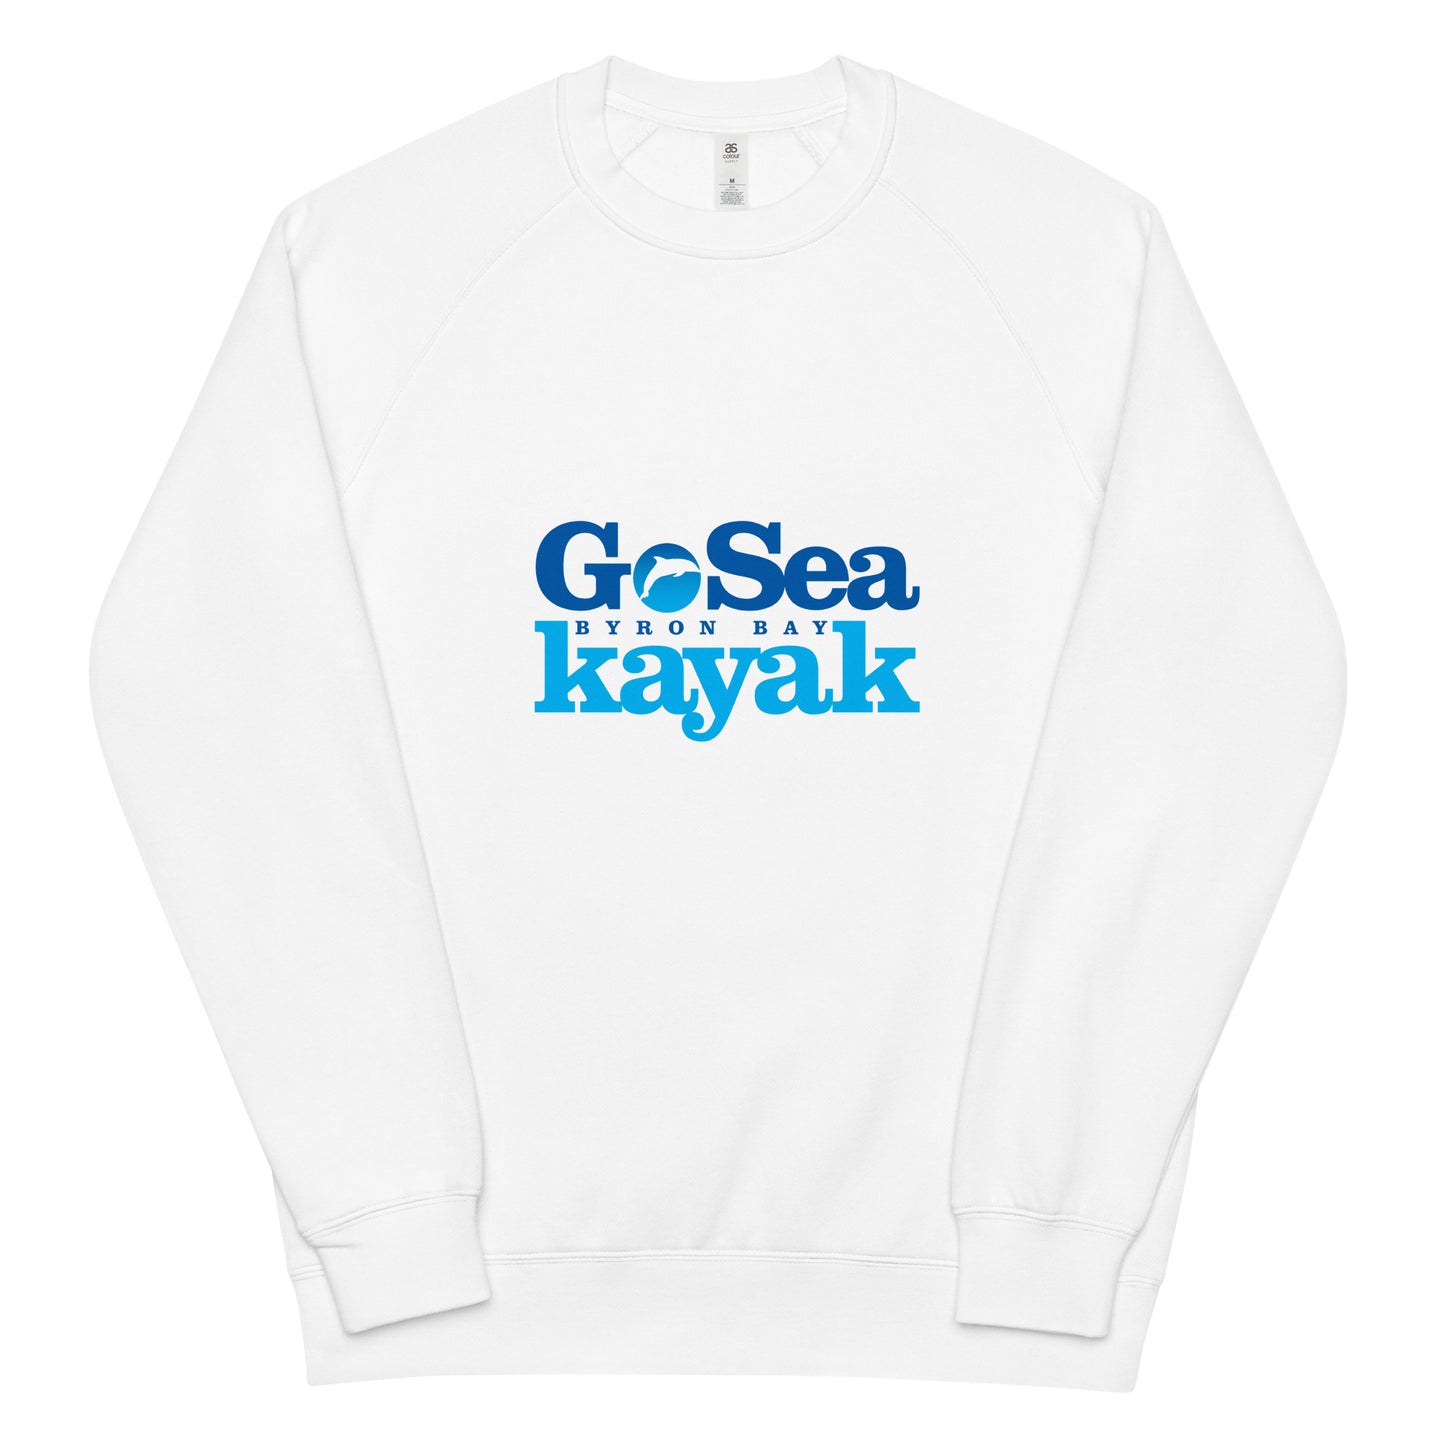  Unisex Sweatshirt - White - Front flat lay view - Go Sea Kayak Byron Bay logo on front - Genuine Byron Bay Merchandise | Produced by Go Sea Kayak Byron Bay 